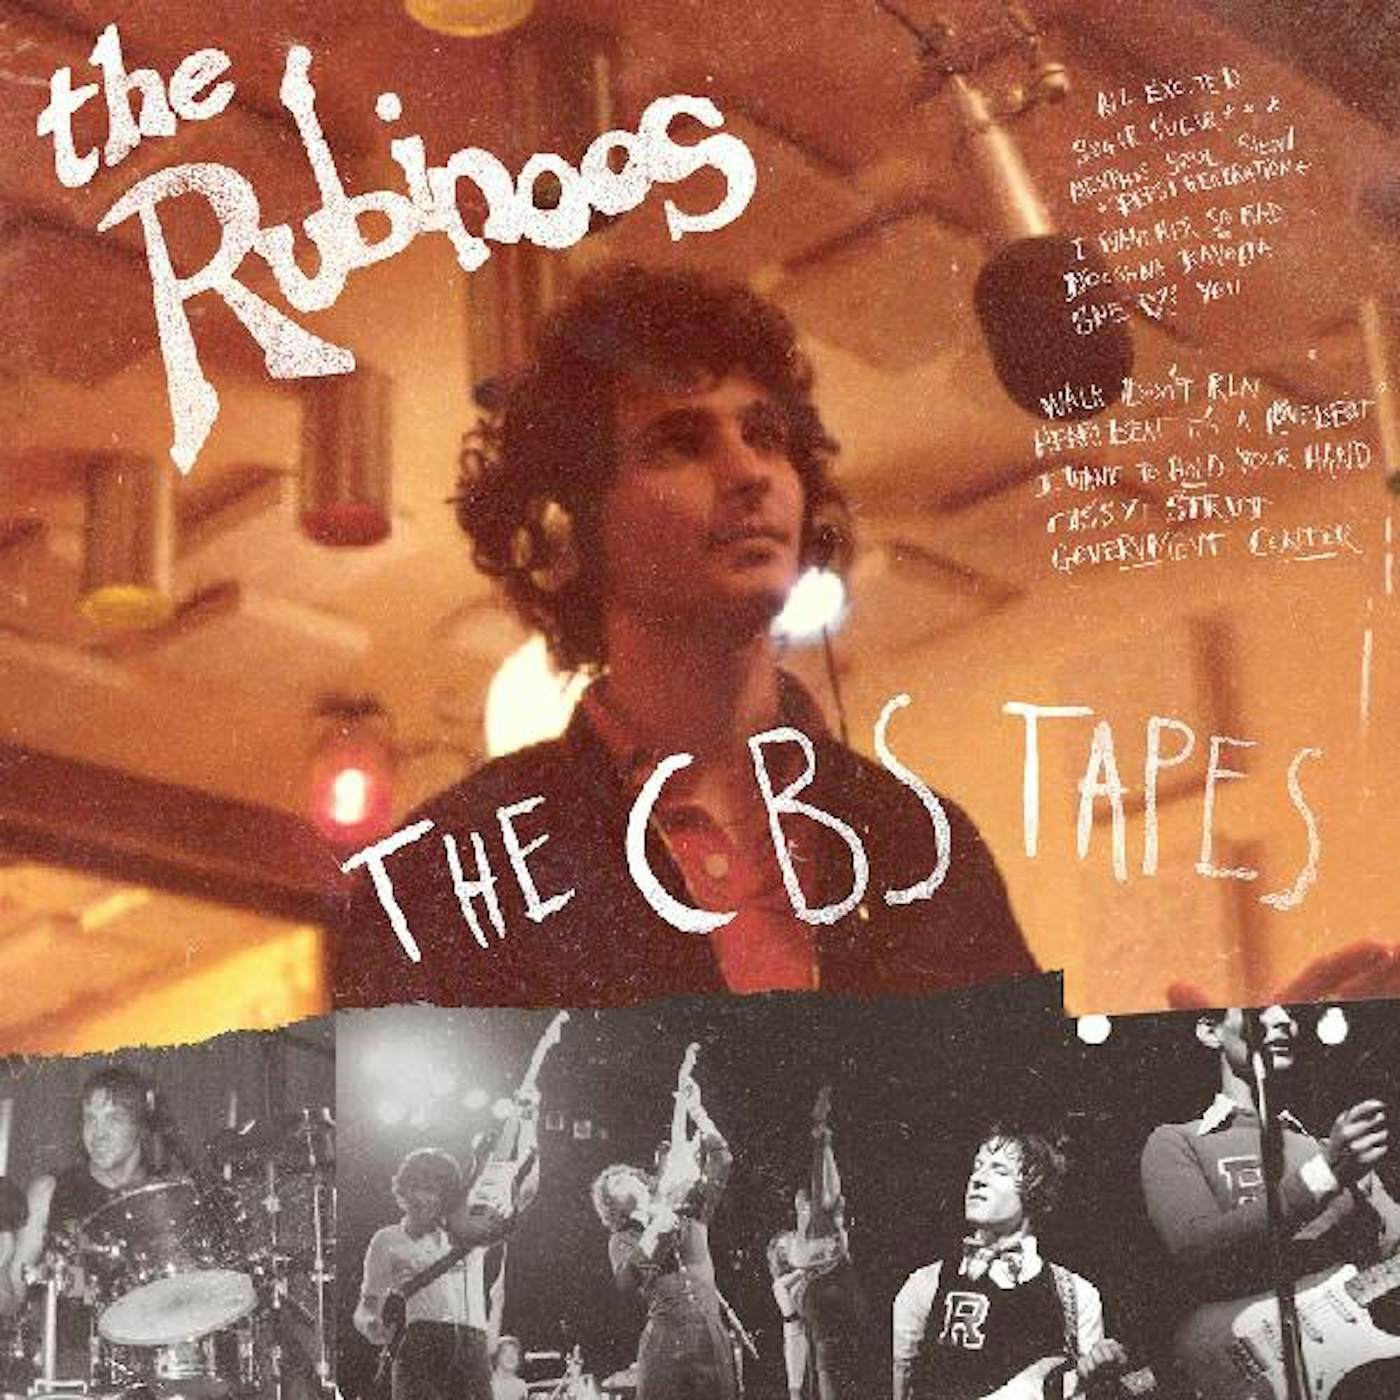 The Rubinoos CBS TAPES CD